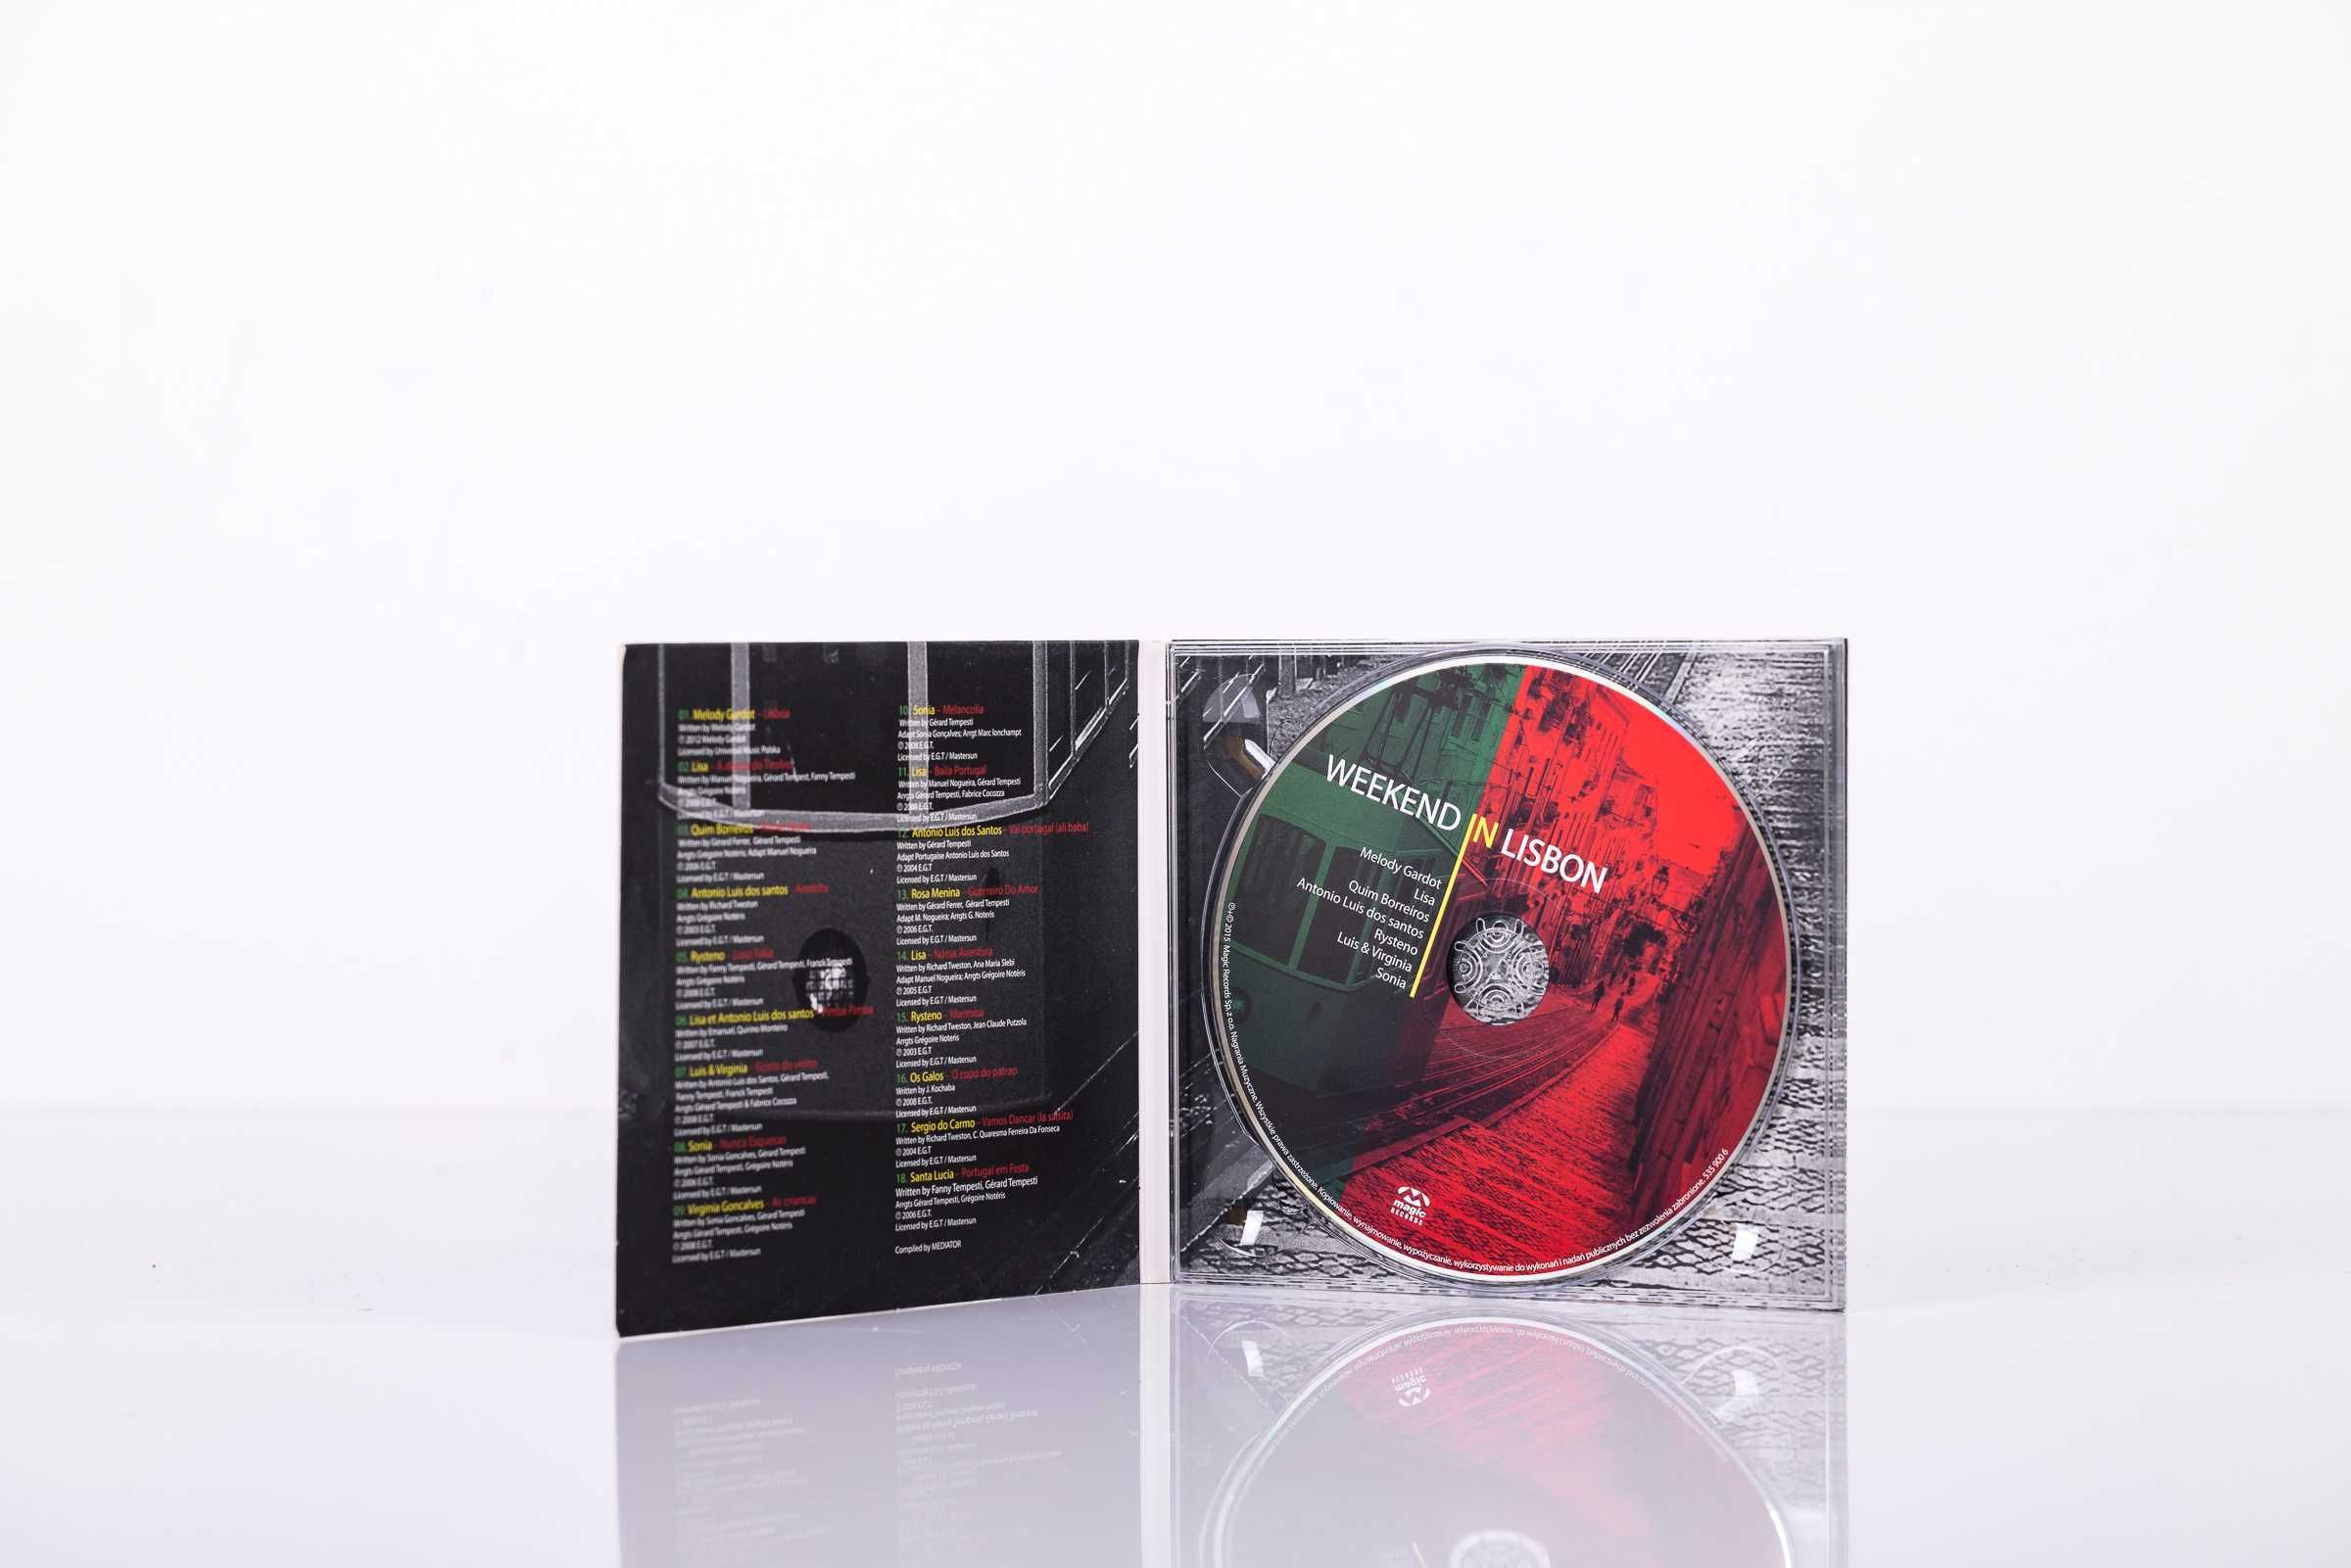 VA – Weekend in Lisbon CD